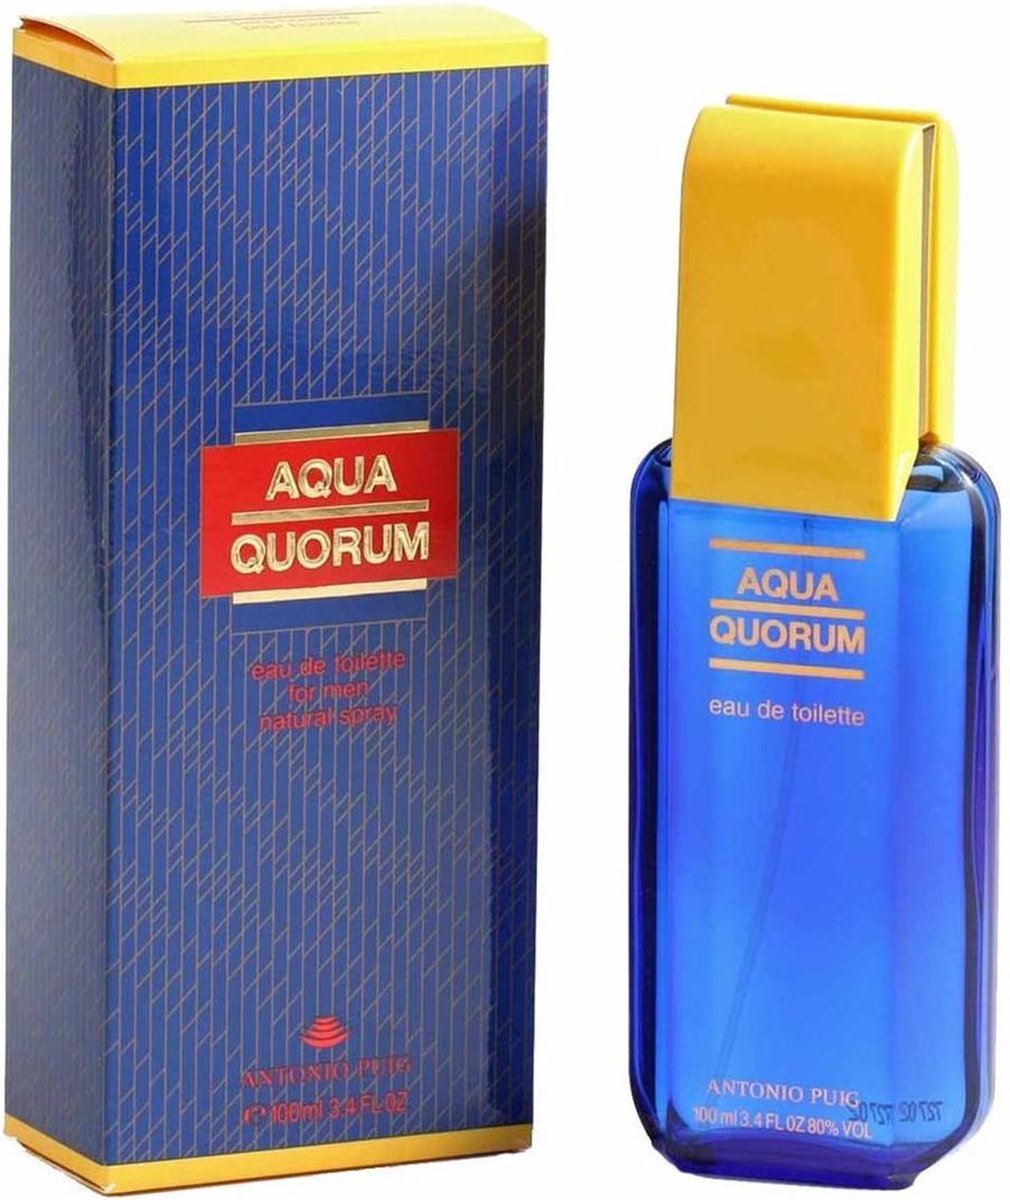 AQUA QUORUM by Antonio Puig 100 ml - Eau De Toilette Spray